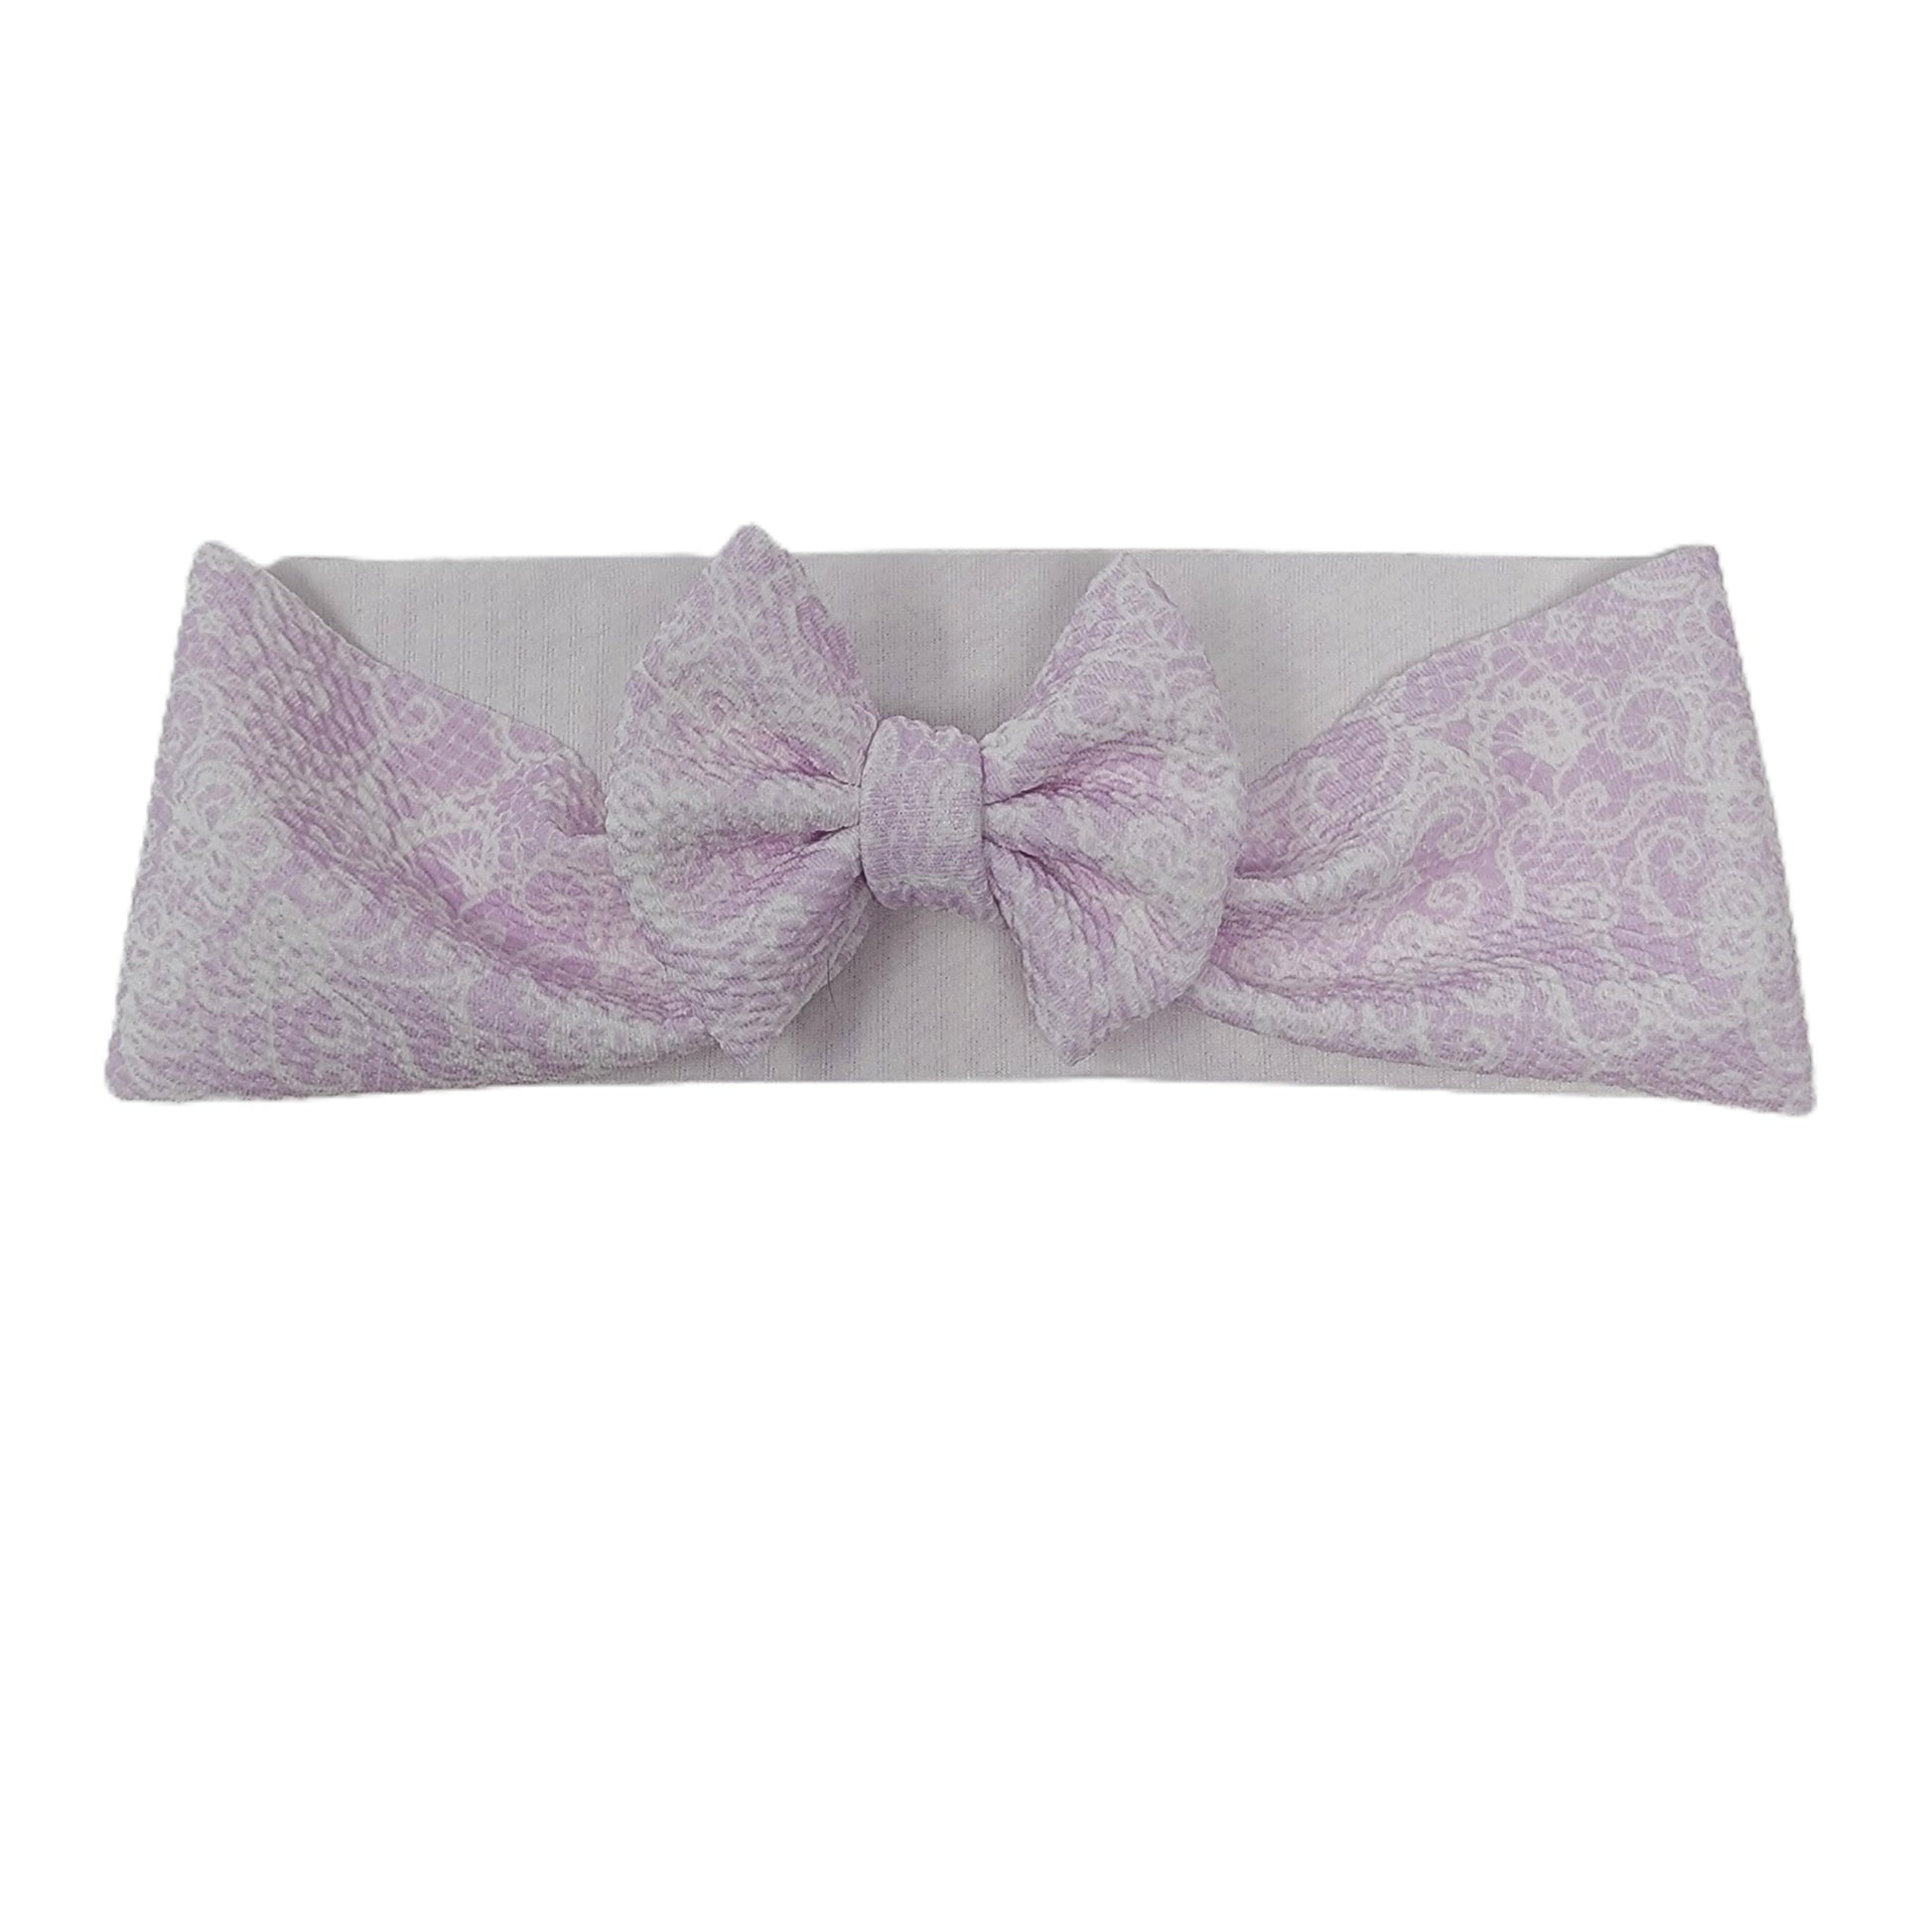 3" Lavender Lace Fabric Bow Headwrap